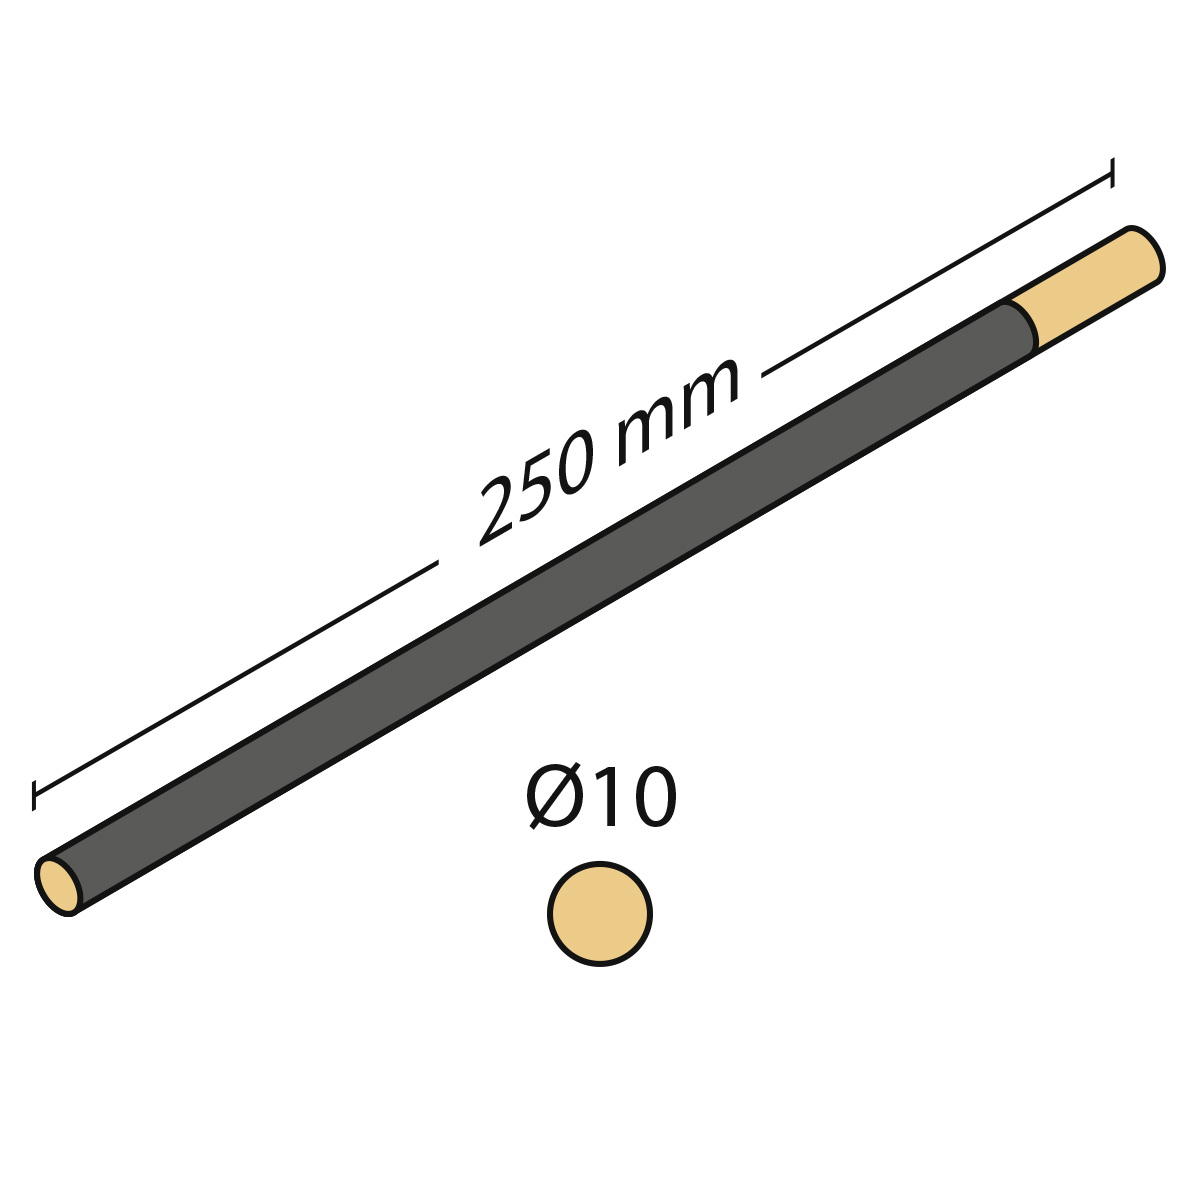 Cabron d'émeri rond, longueur 250 mm, Ø 10 mm, ultra fin, grain 2500